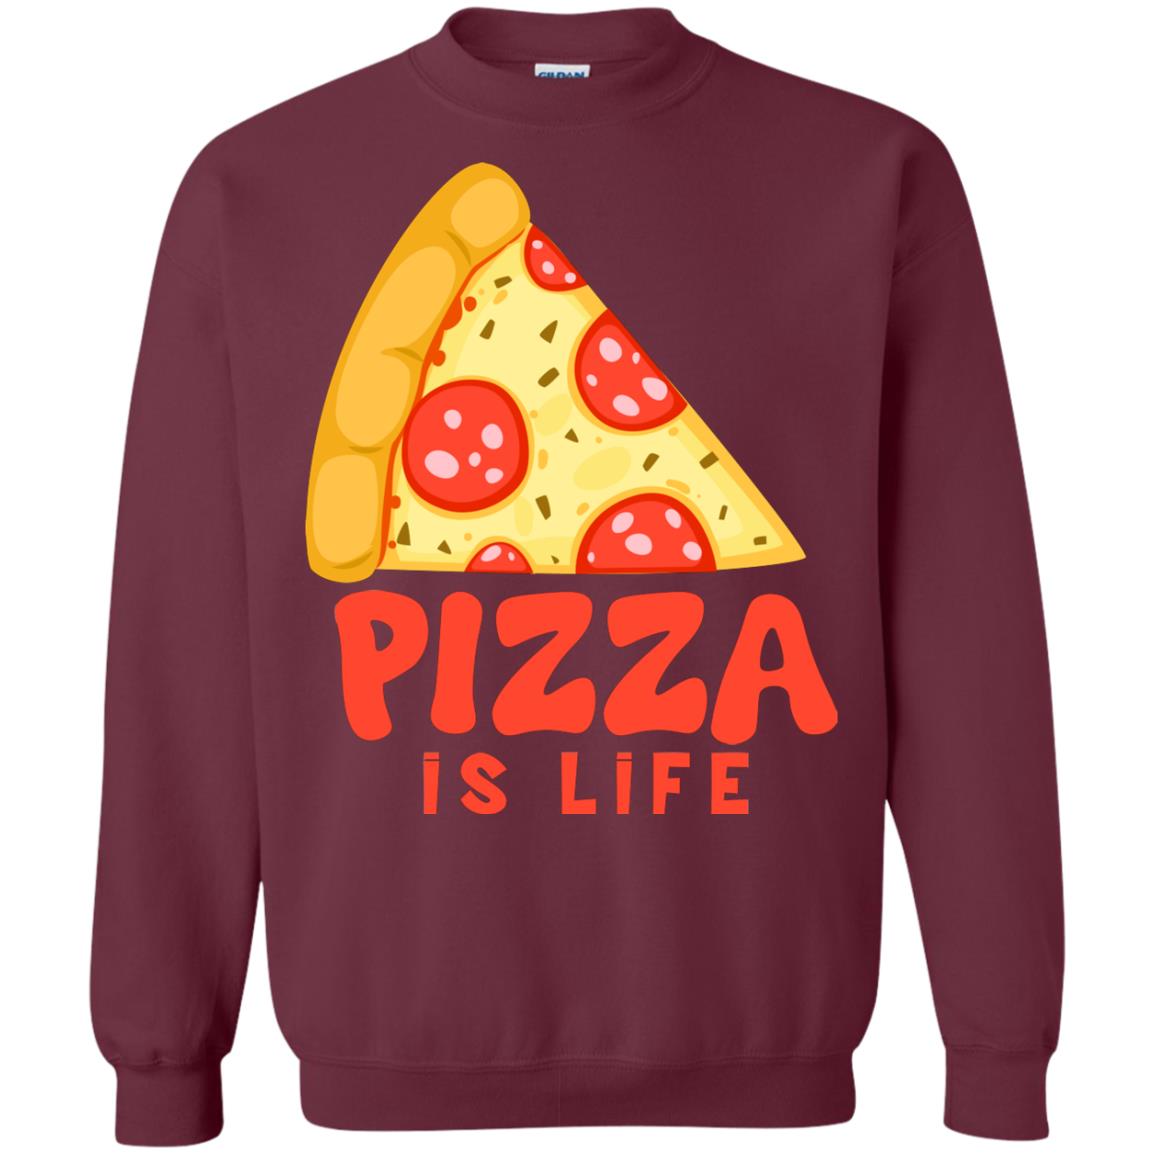 Pizza Is Life Shirt For Pizza LoversG180 Gildan Crewneck Pullover Sweatshirt 8 oz.